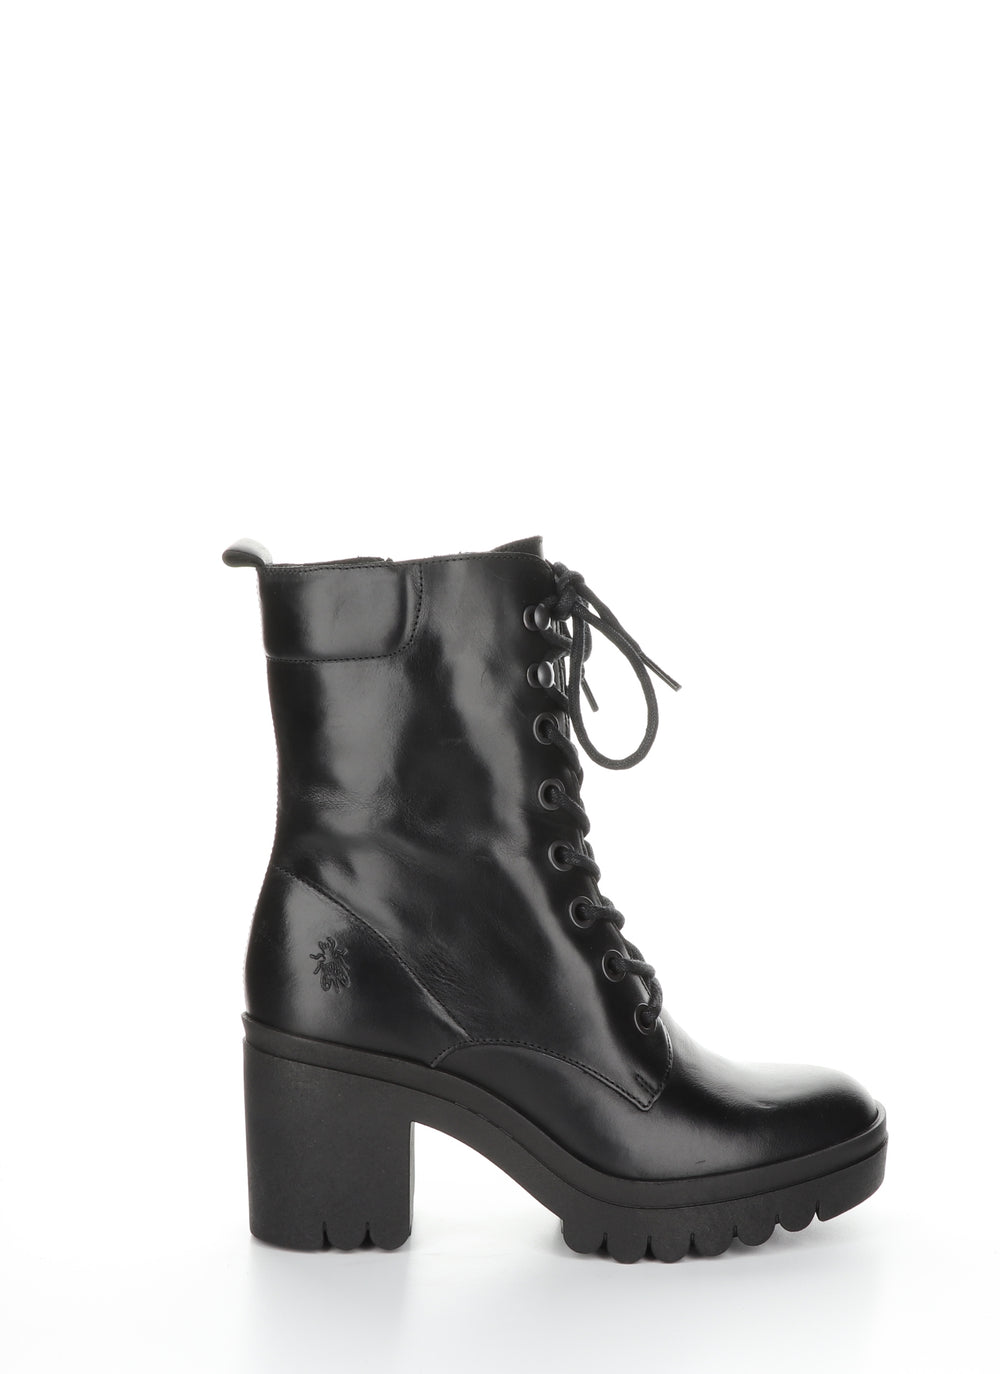 TIEL642FLY Black Zip Up Boots|TIEL642FLY Bottes avec Fermeture Zippée in Noir